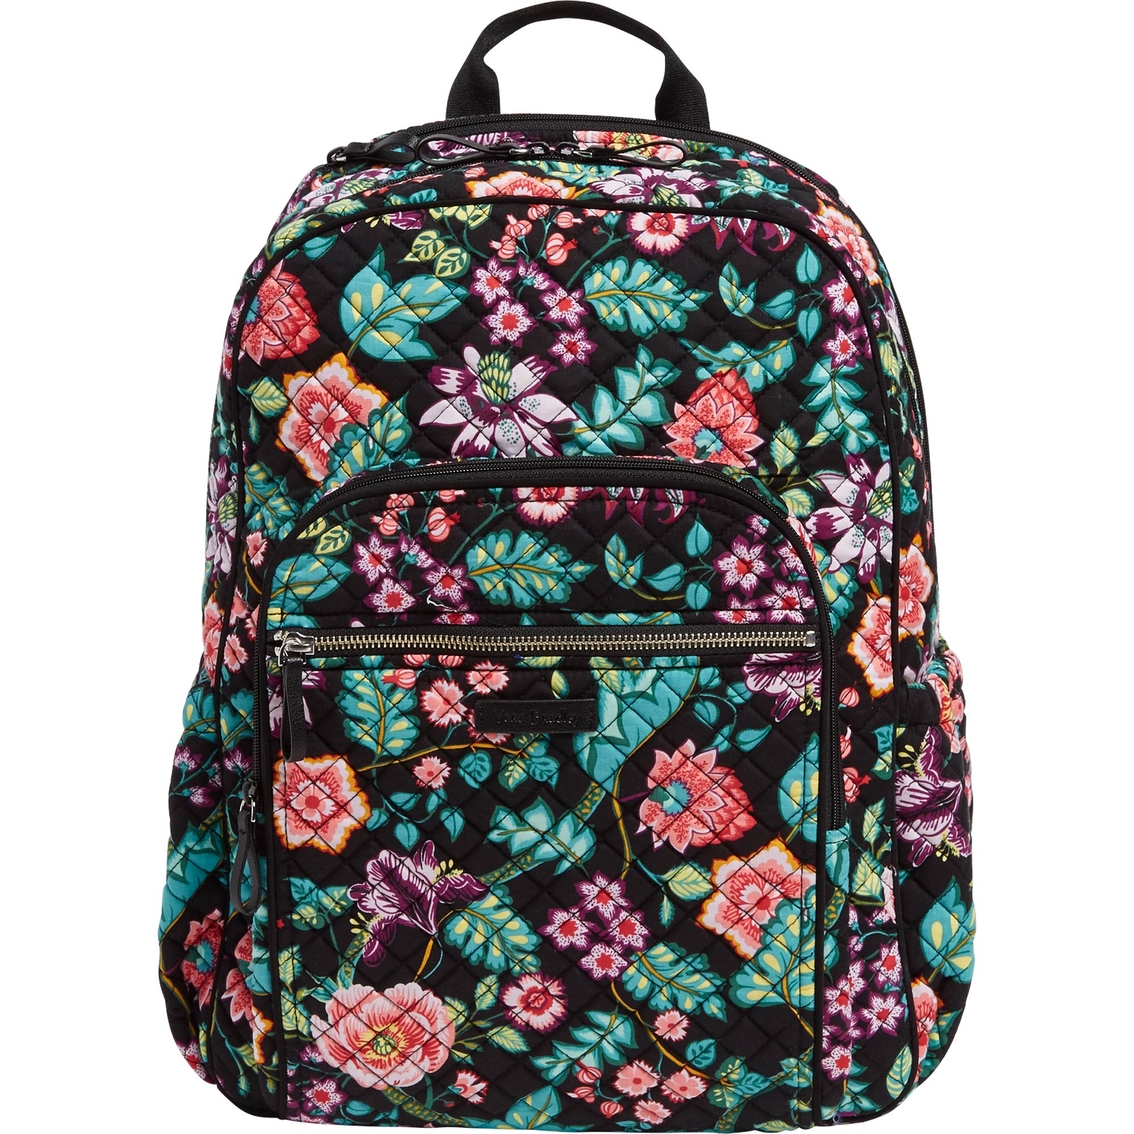 Vera Bradley Iconic Campus Backpack, Vines Floral | Backpacks | More | Shop The Exchange